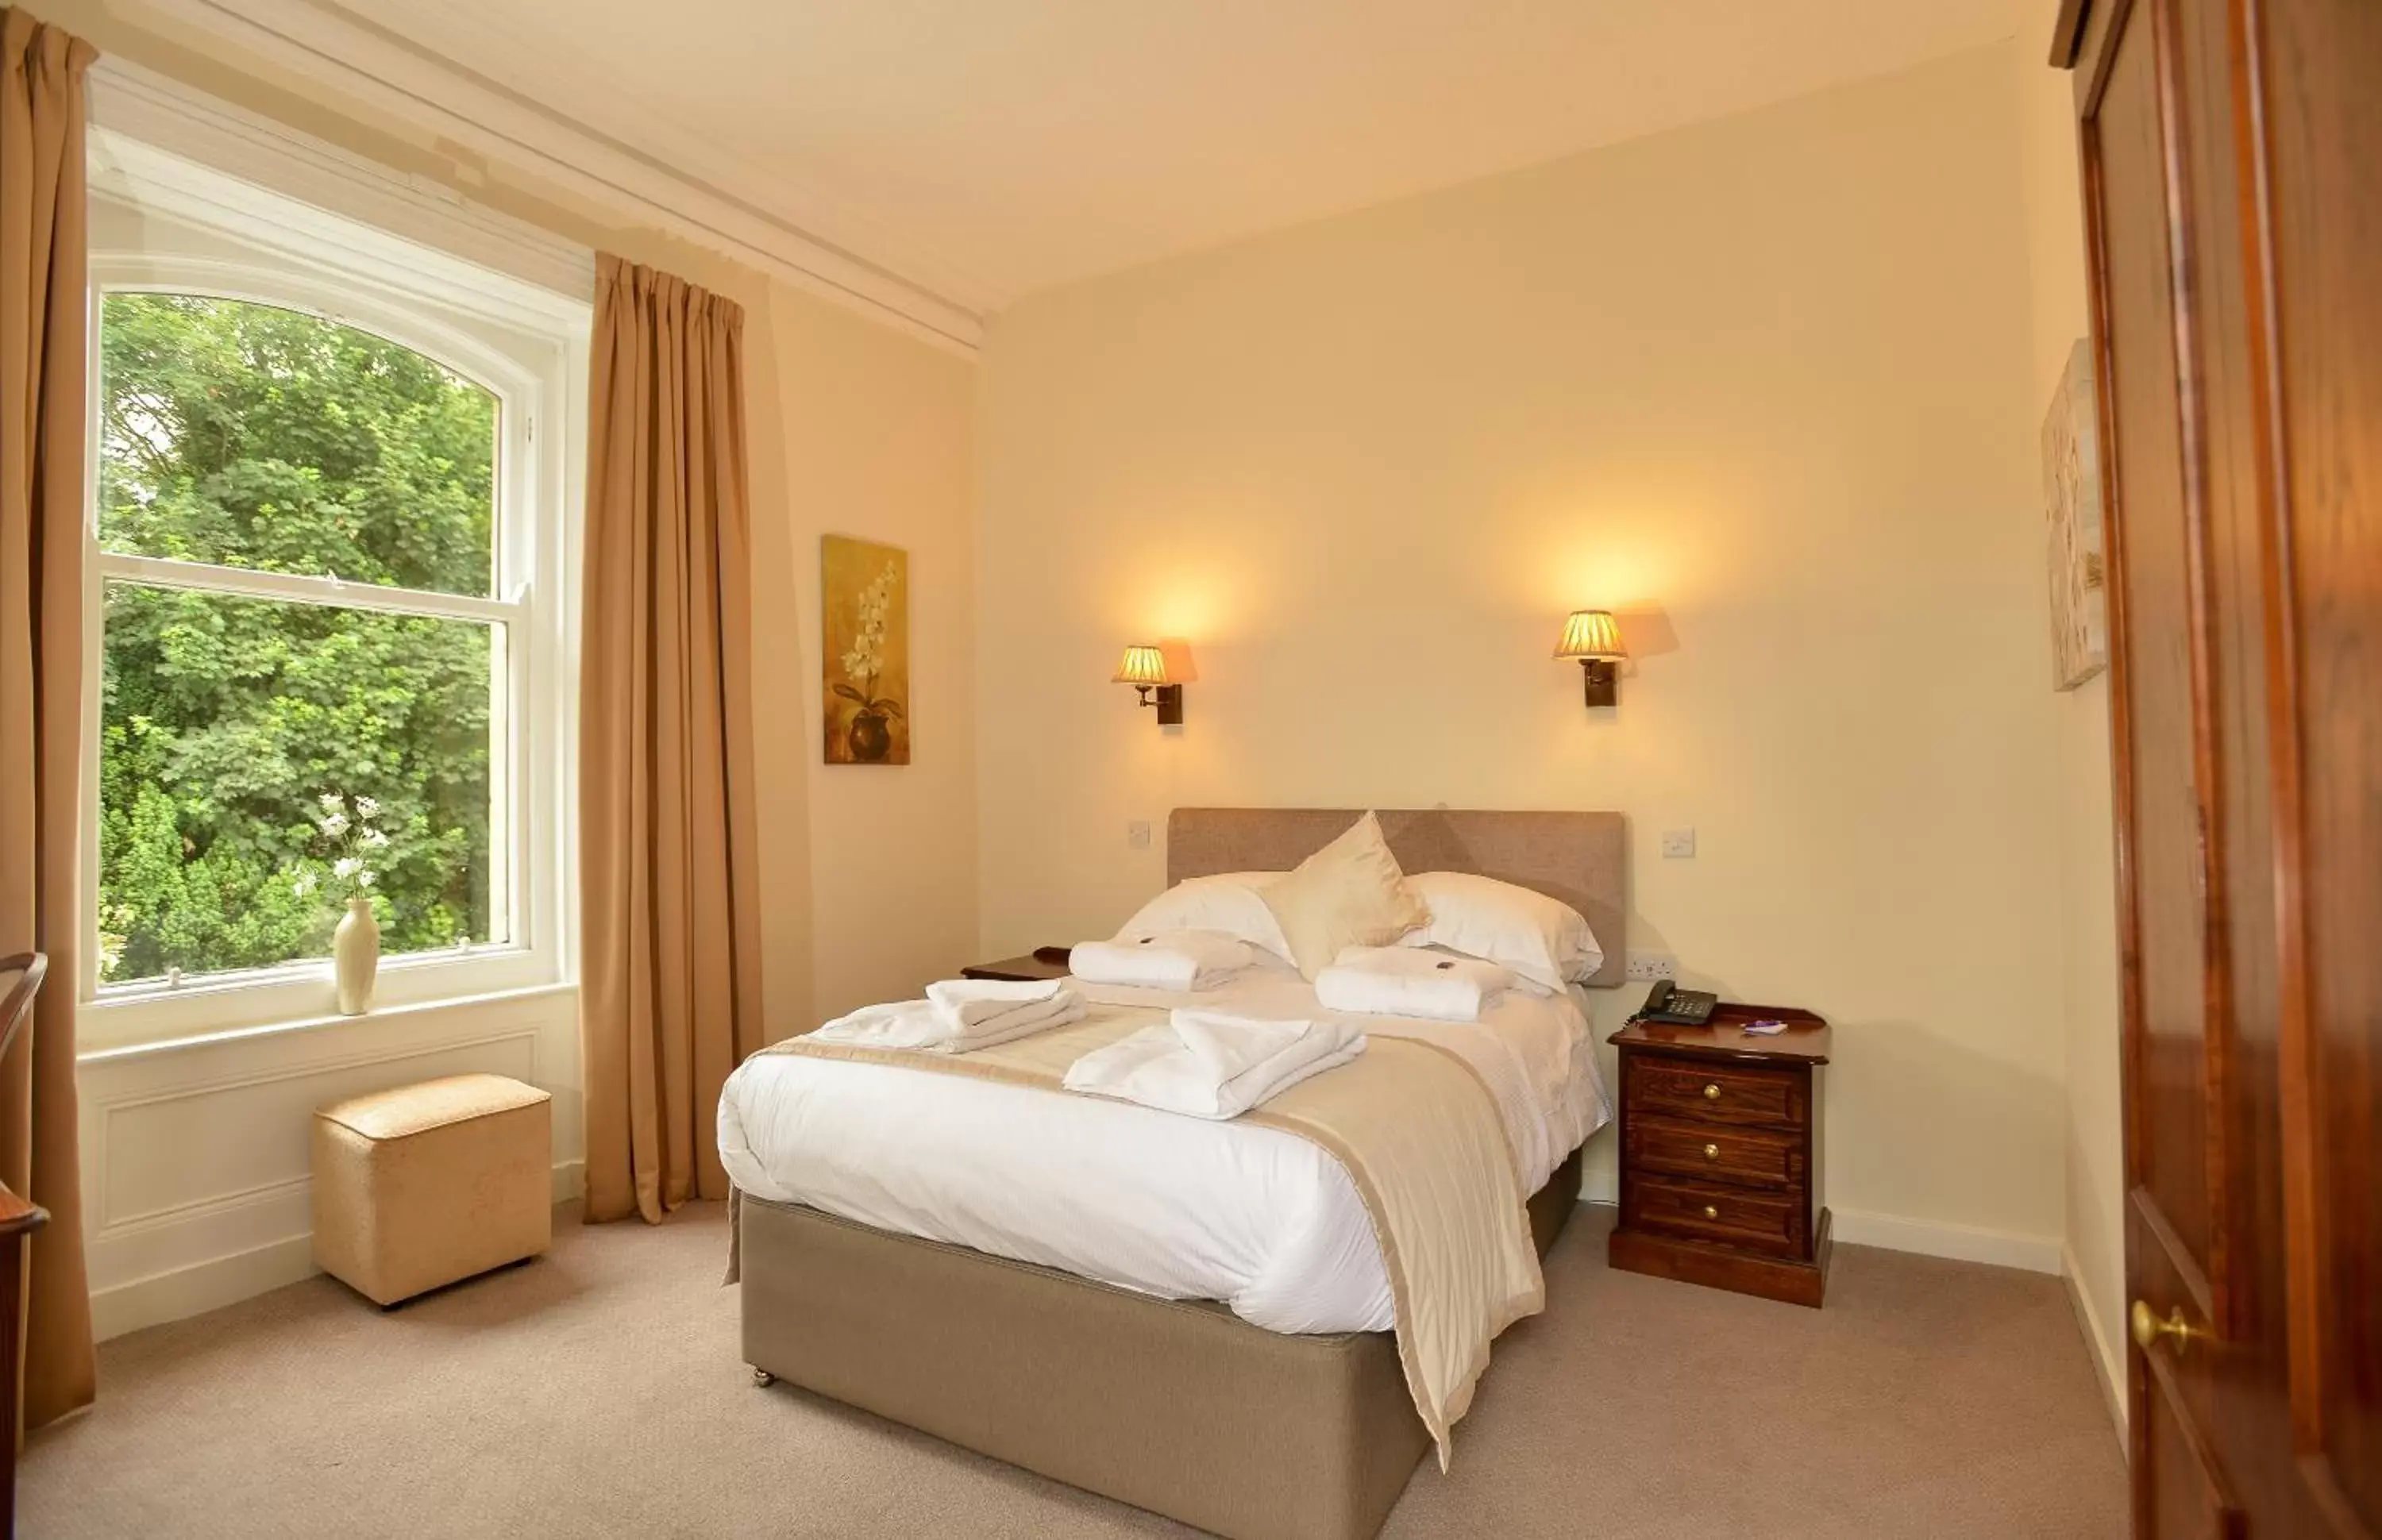 Bed, Room Photo in Steeton Hall Hotel & Restaurant